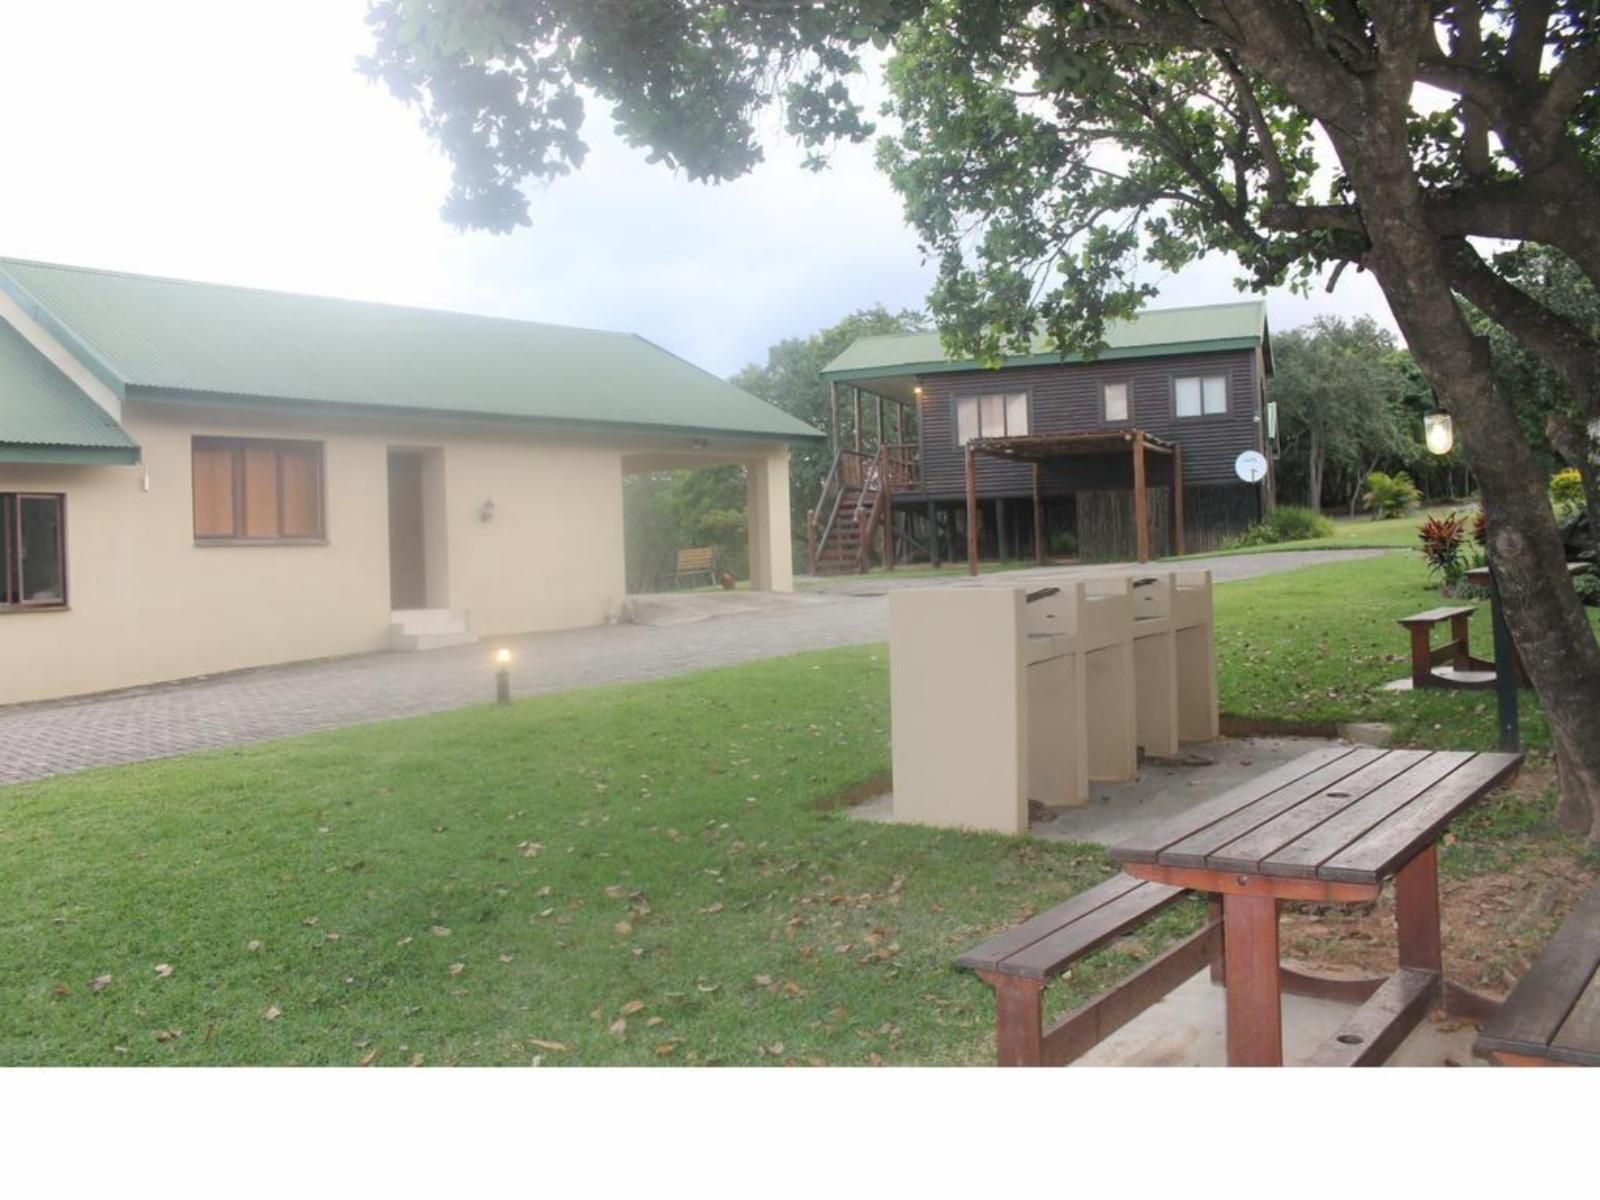 Cuckoo Ridge Country Retreat Hazyview Mpumalanga South Africa House, Building, Architecture